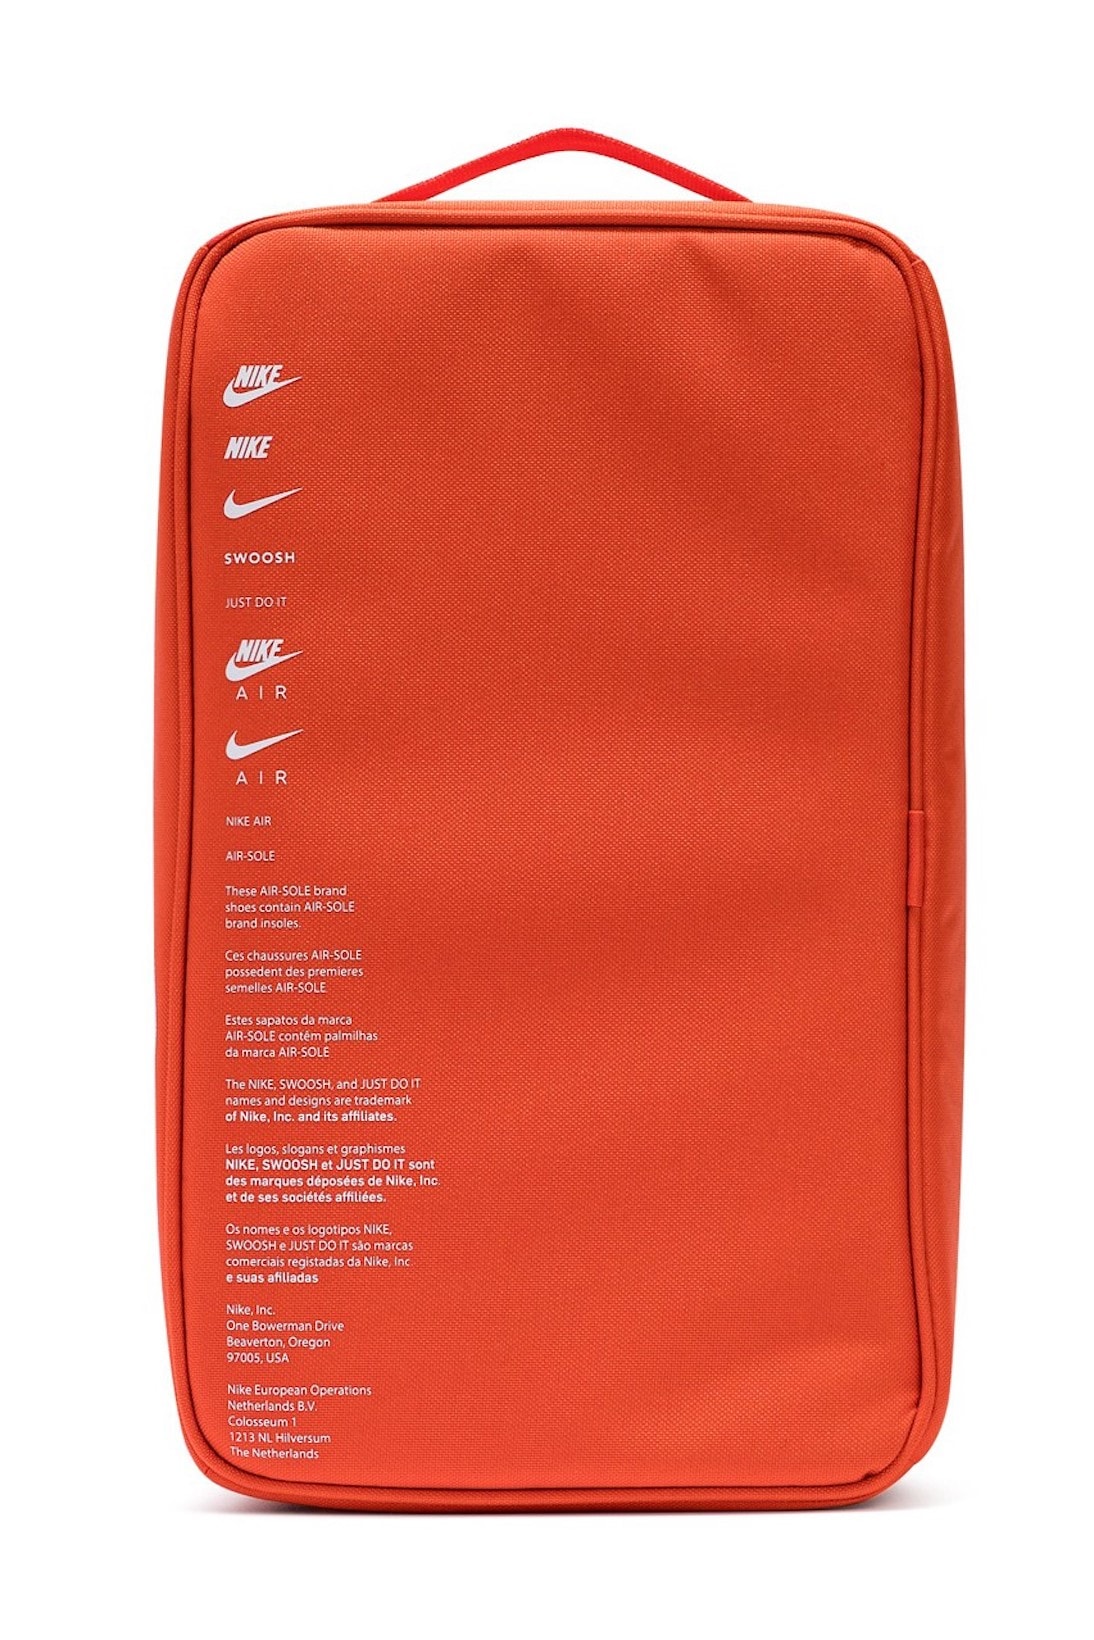 nike sportswear shoebox bag orange white back